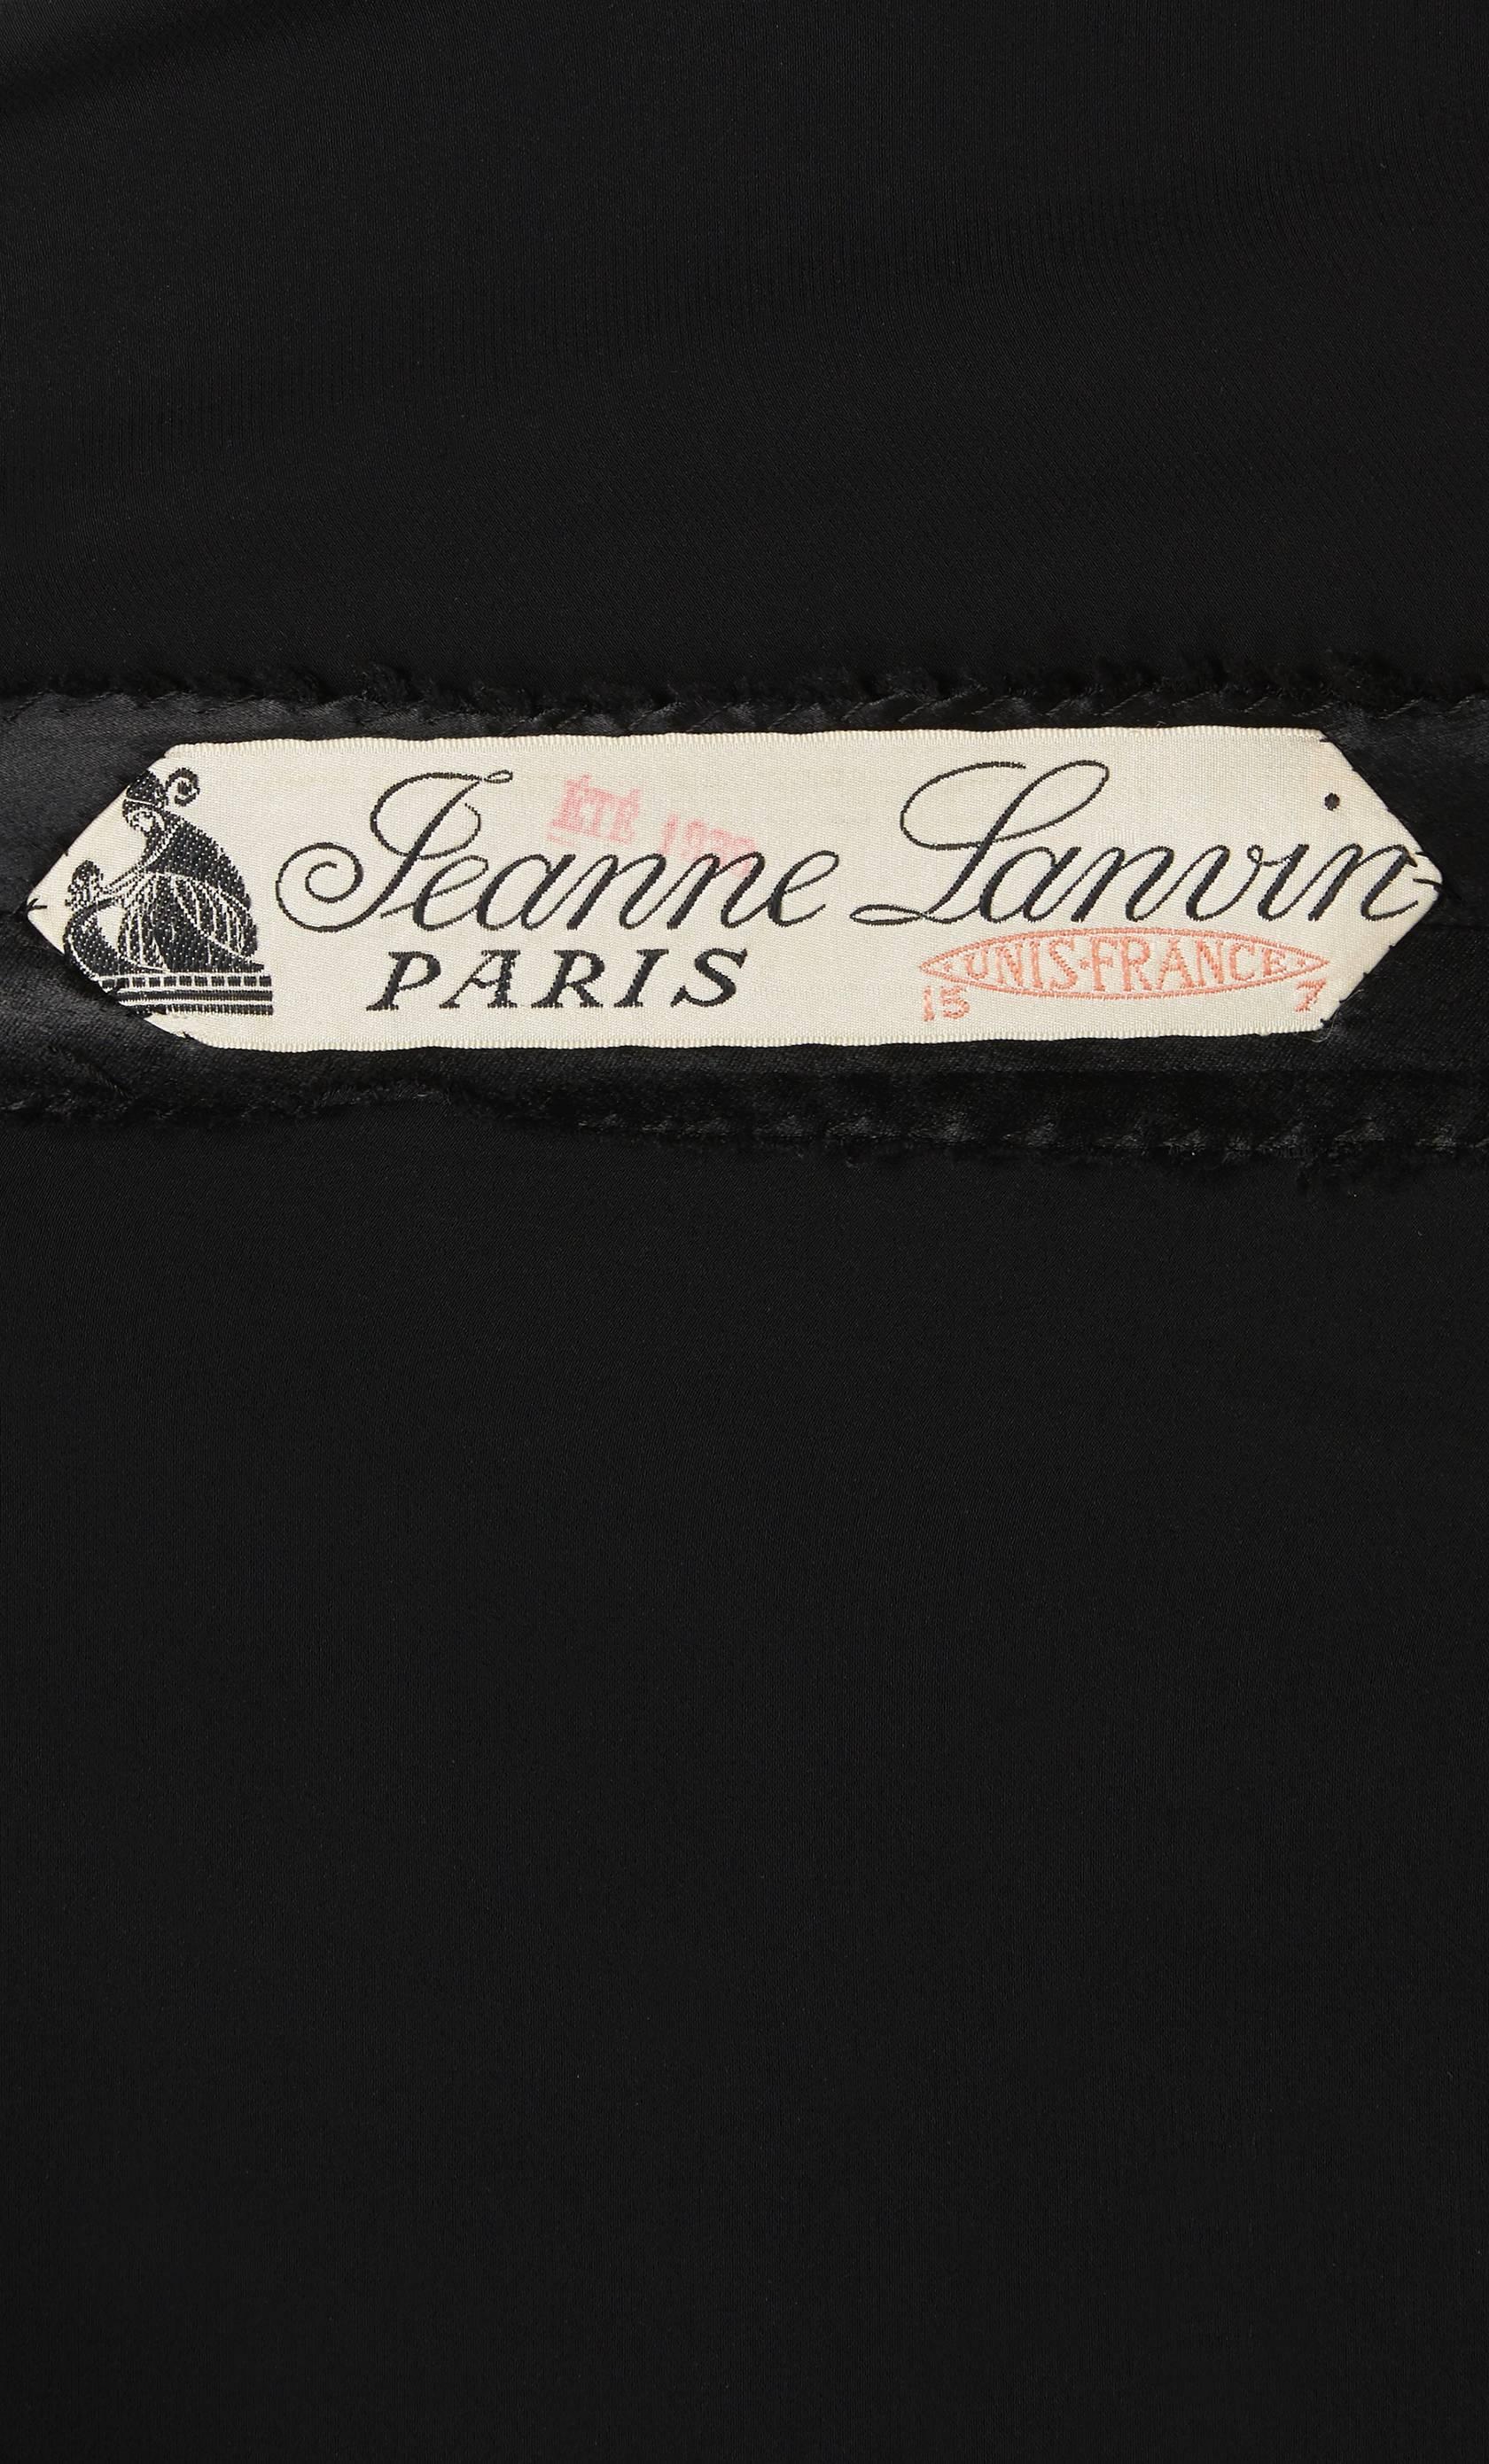 Women's Lanvin haute couture black dress, Spring/Summer 1938 For Sale